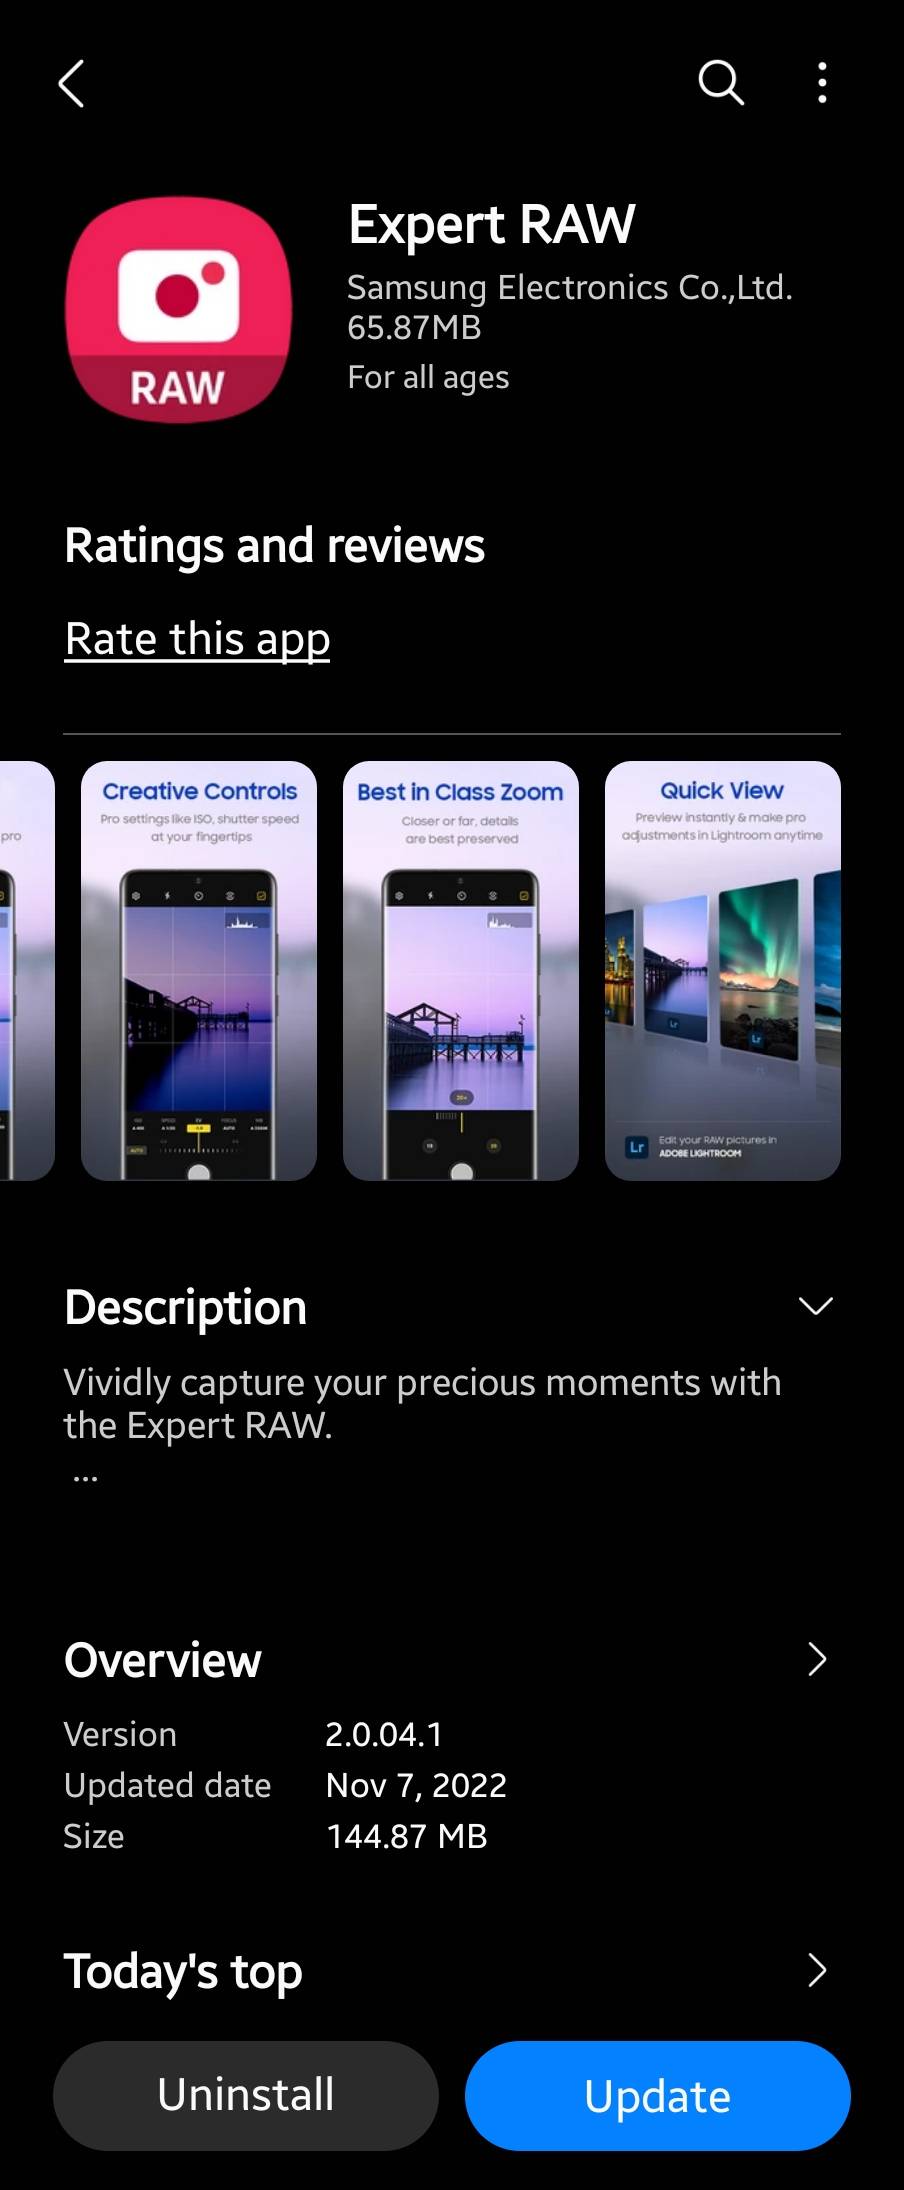 Samsung Expert RAW latest 2.0.04.1 update